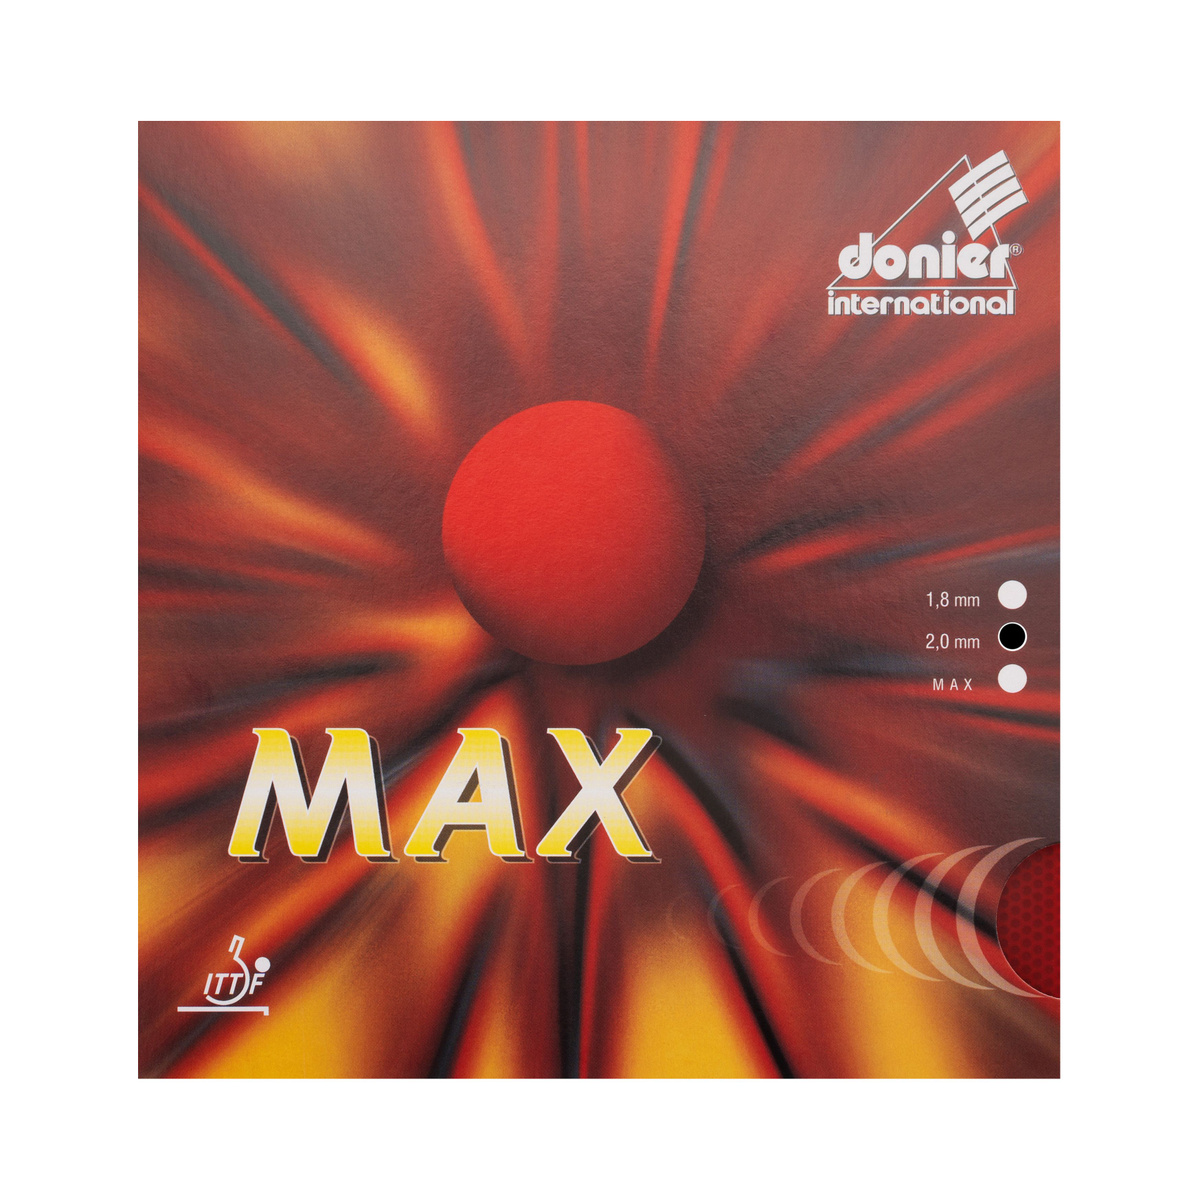 DONIER MAX 2.0